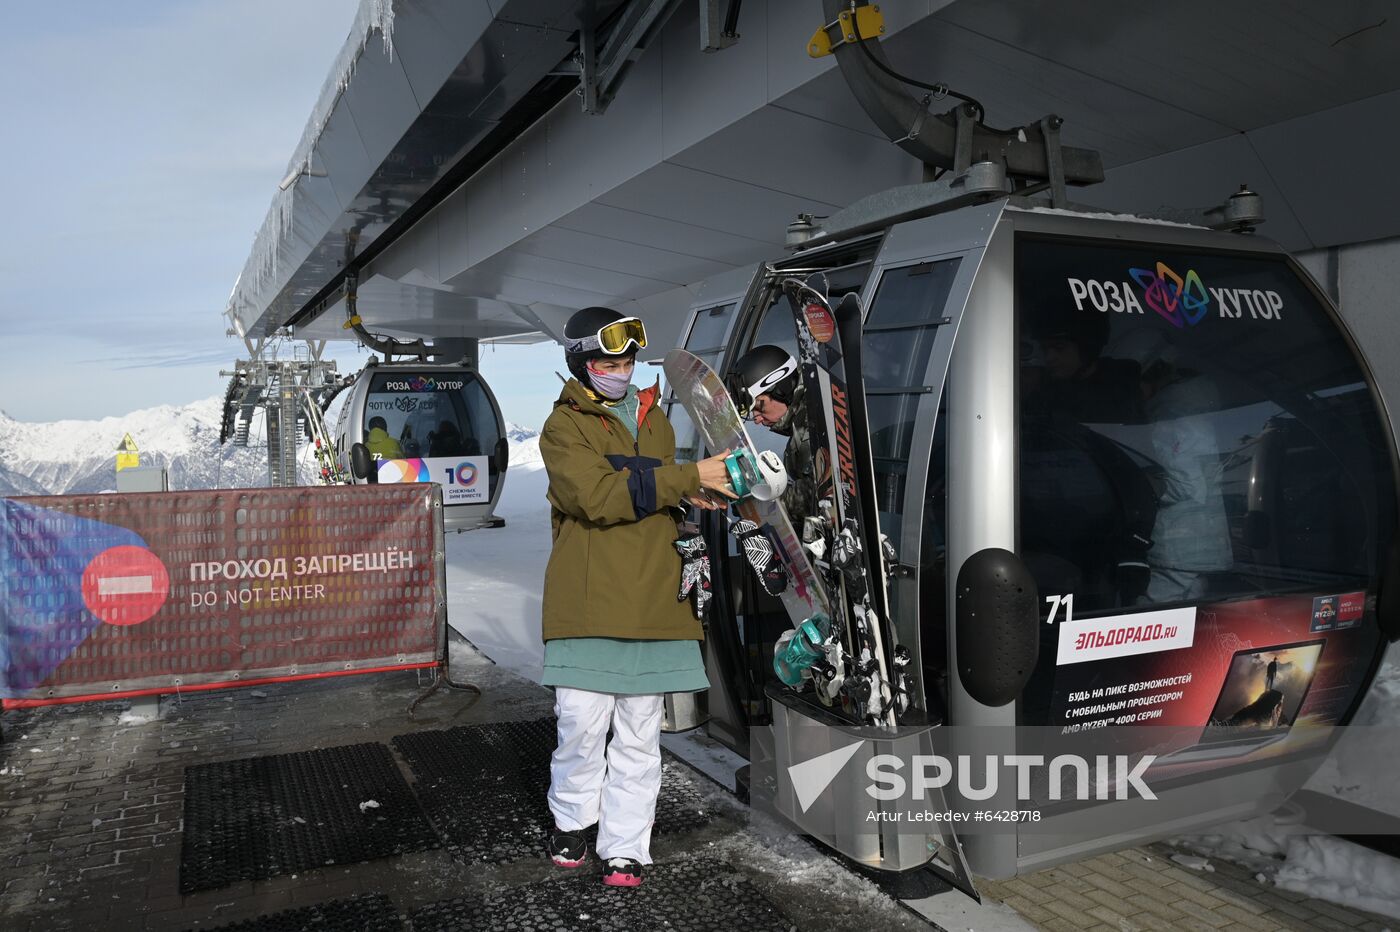 Russia Winter Season Kicks Off In Sochi